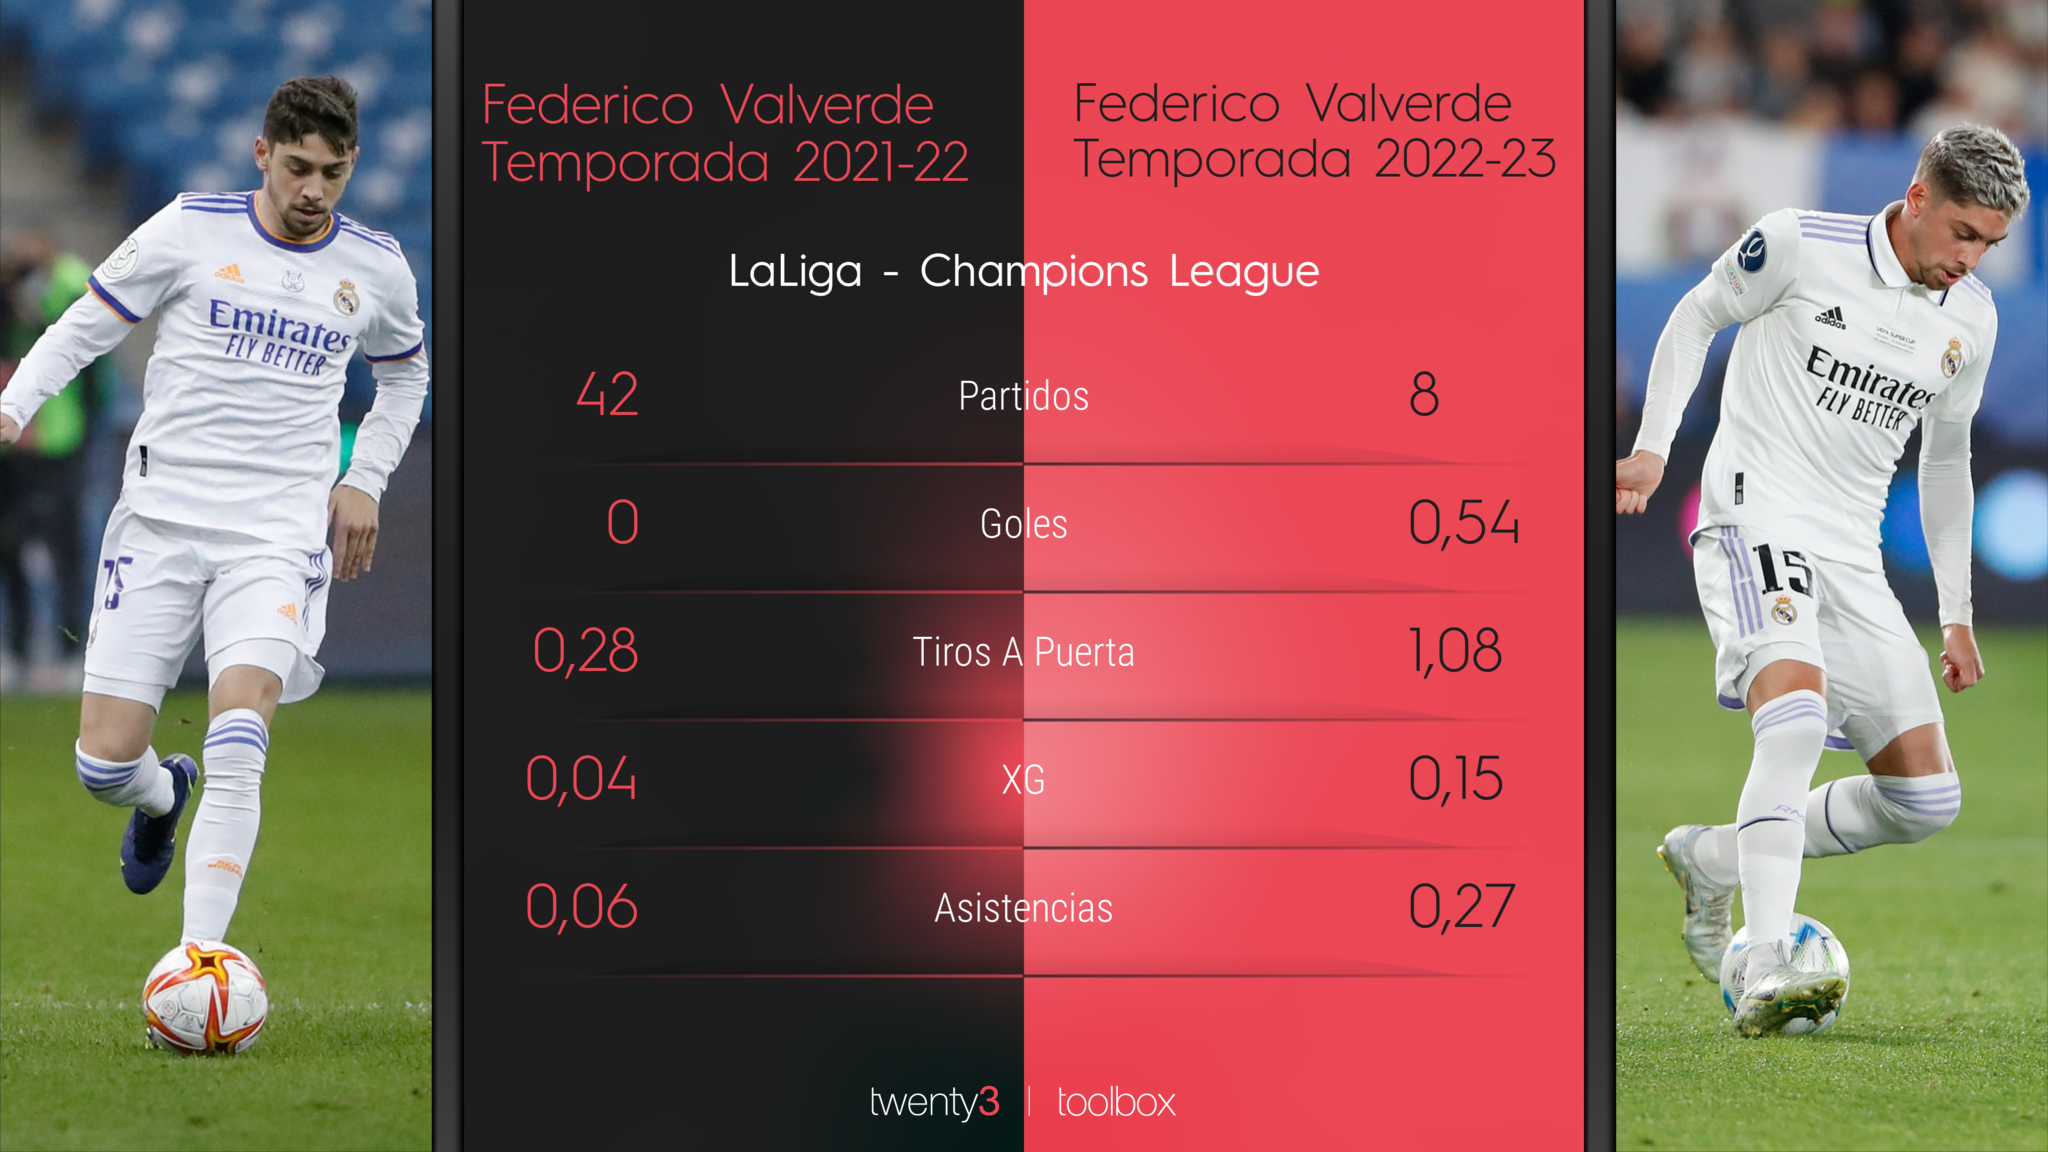 Valverde 2021-22 vs Valverde 2022-23